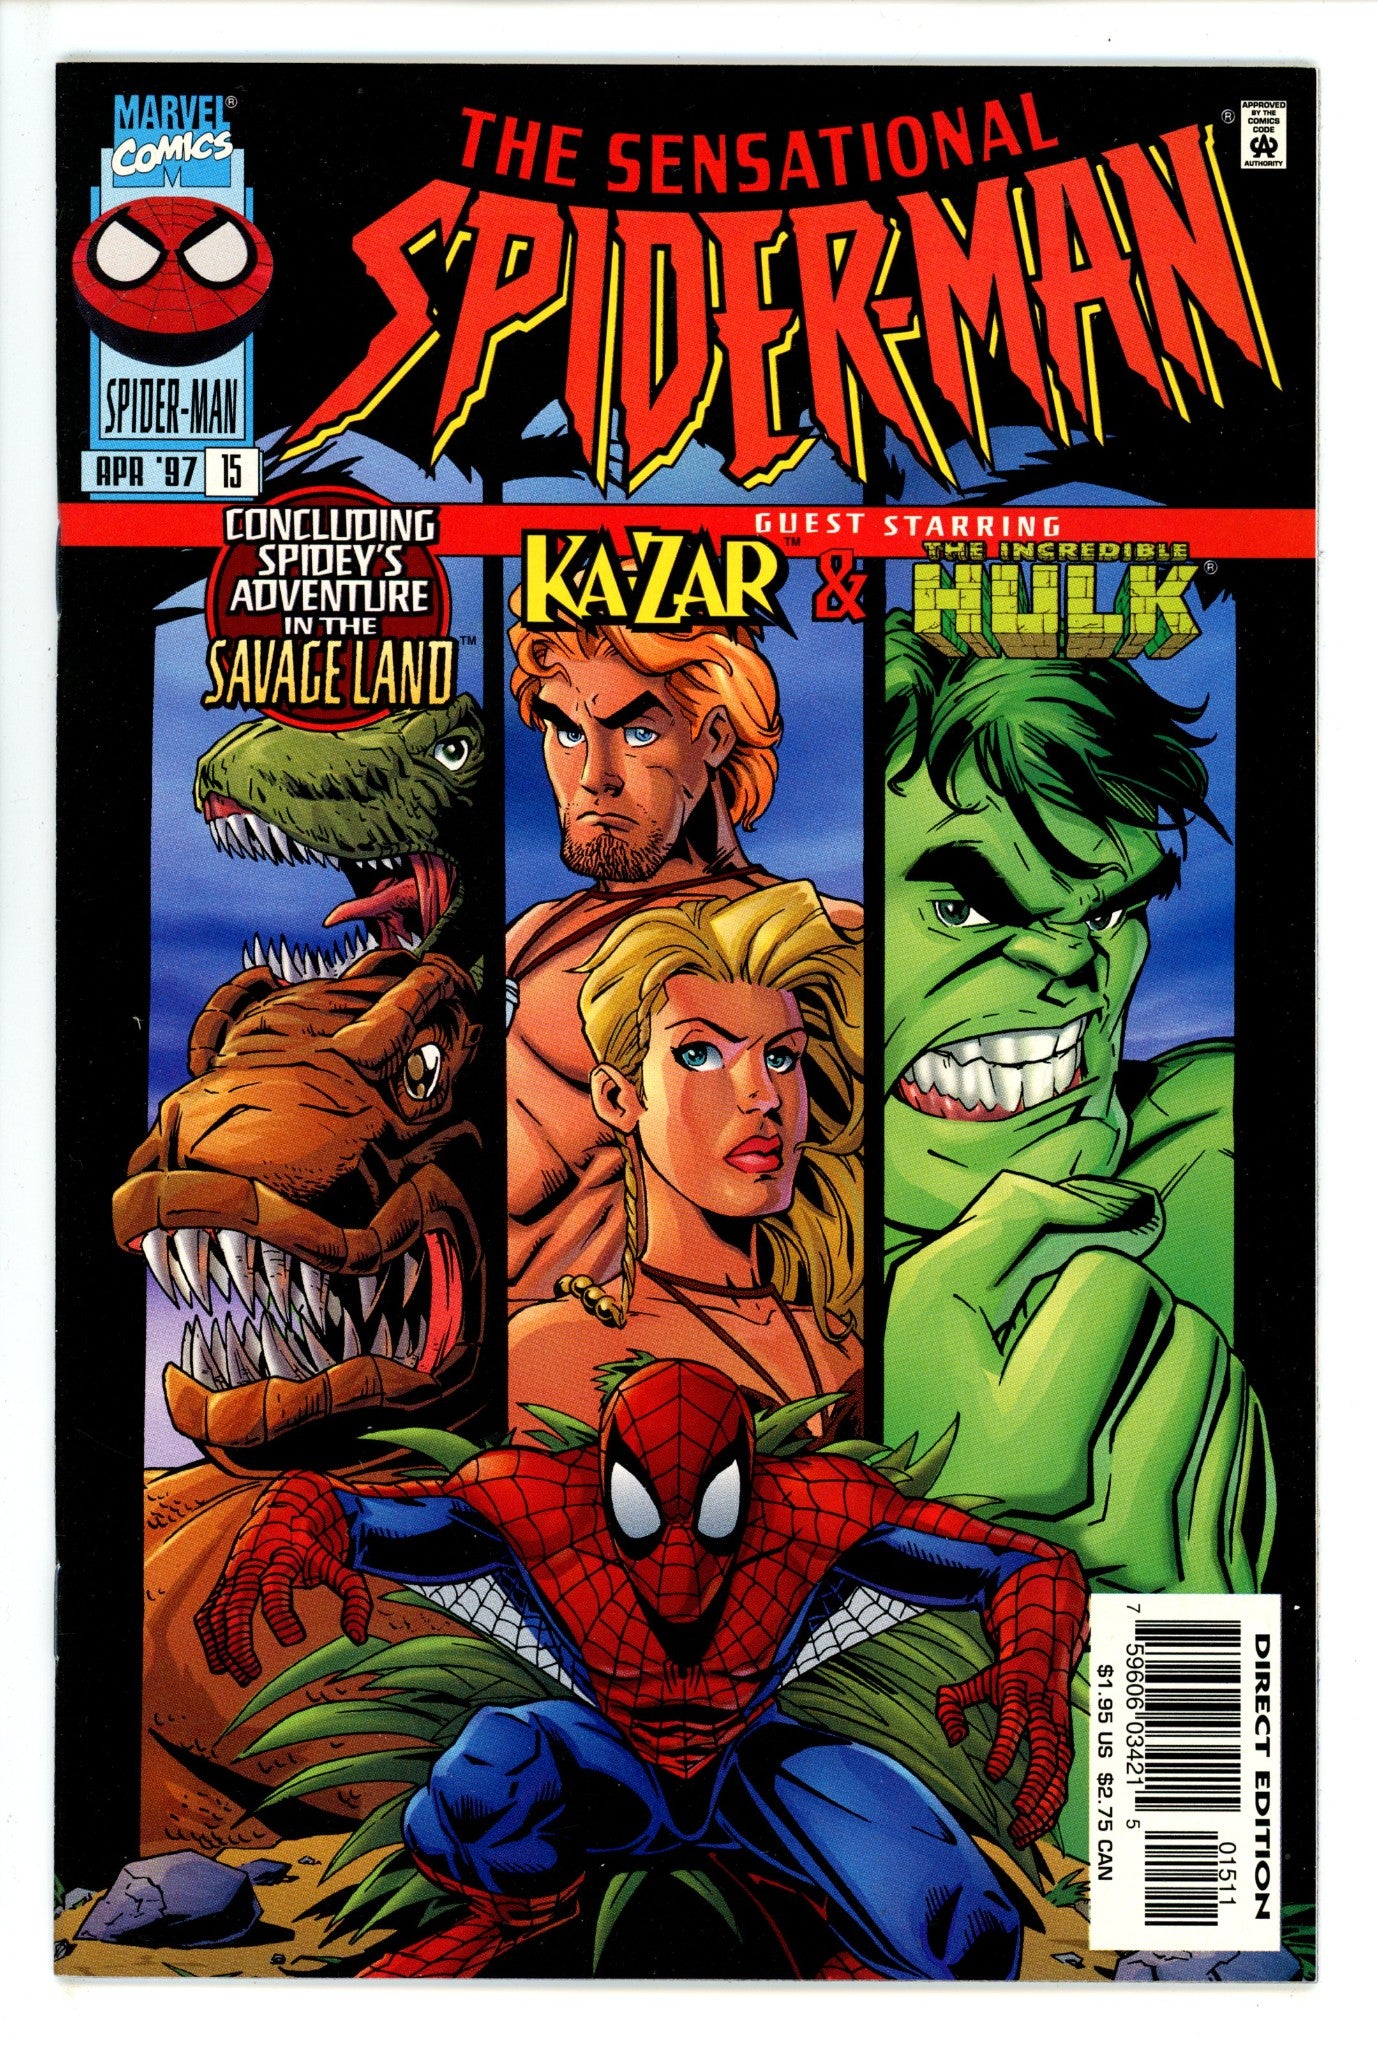 The Sensational Spider-Man Vol 1 15 (1997)